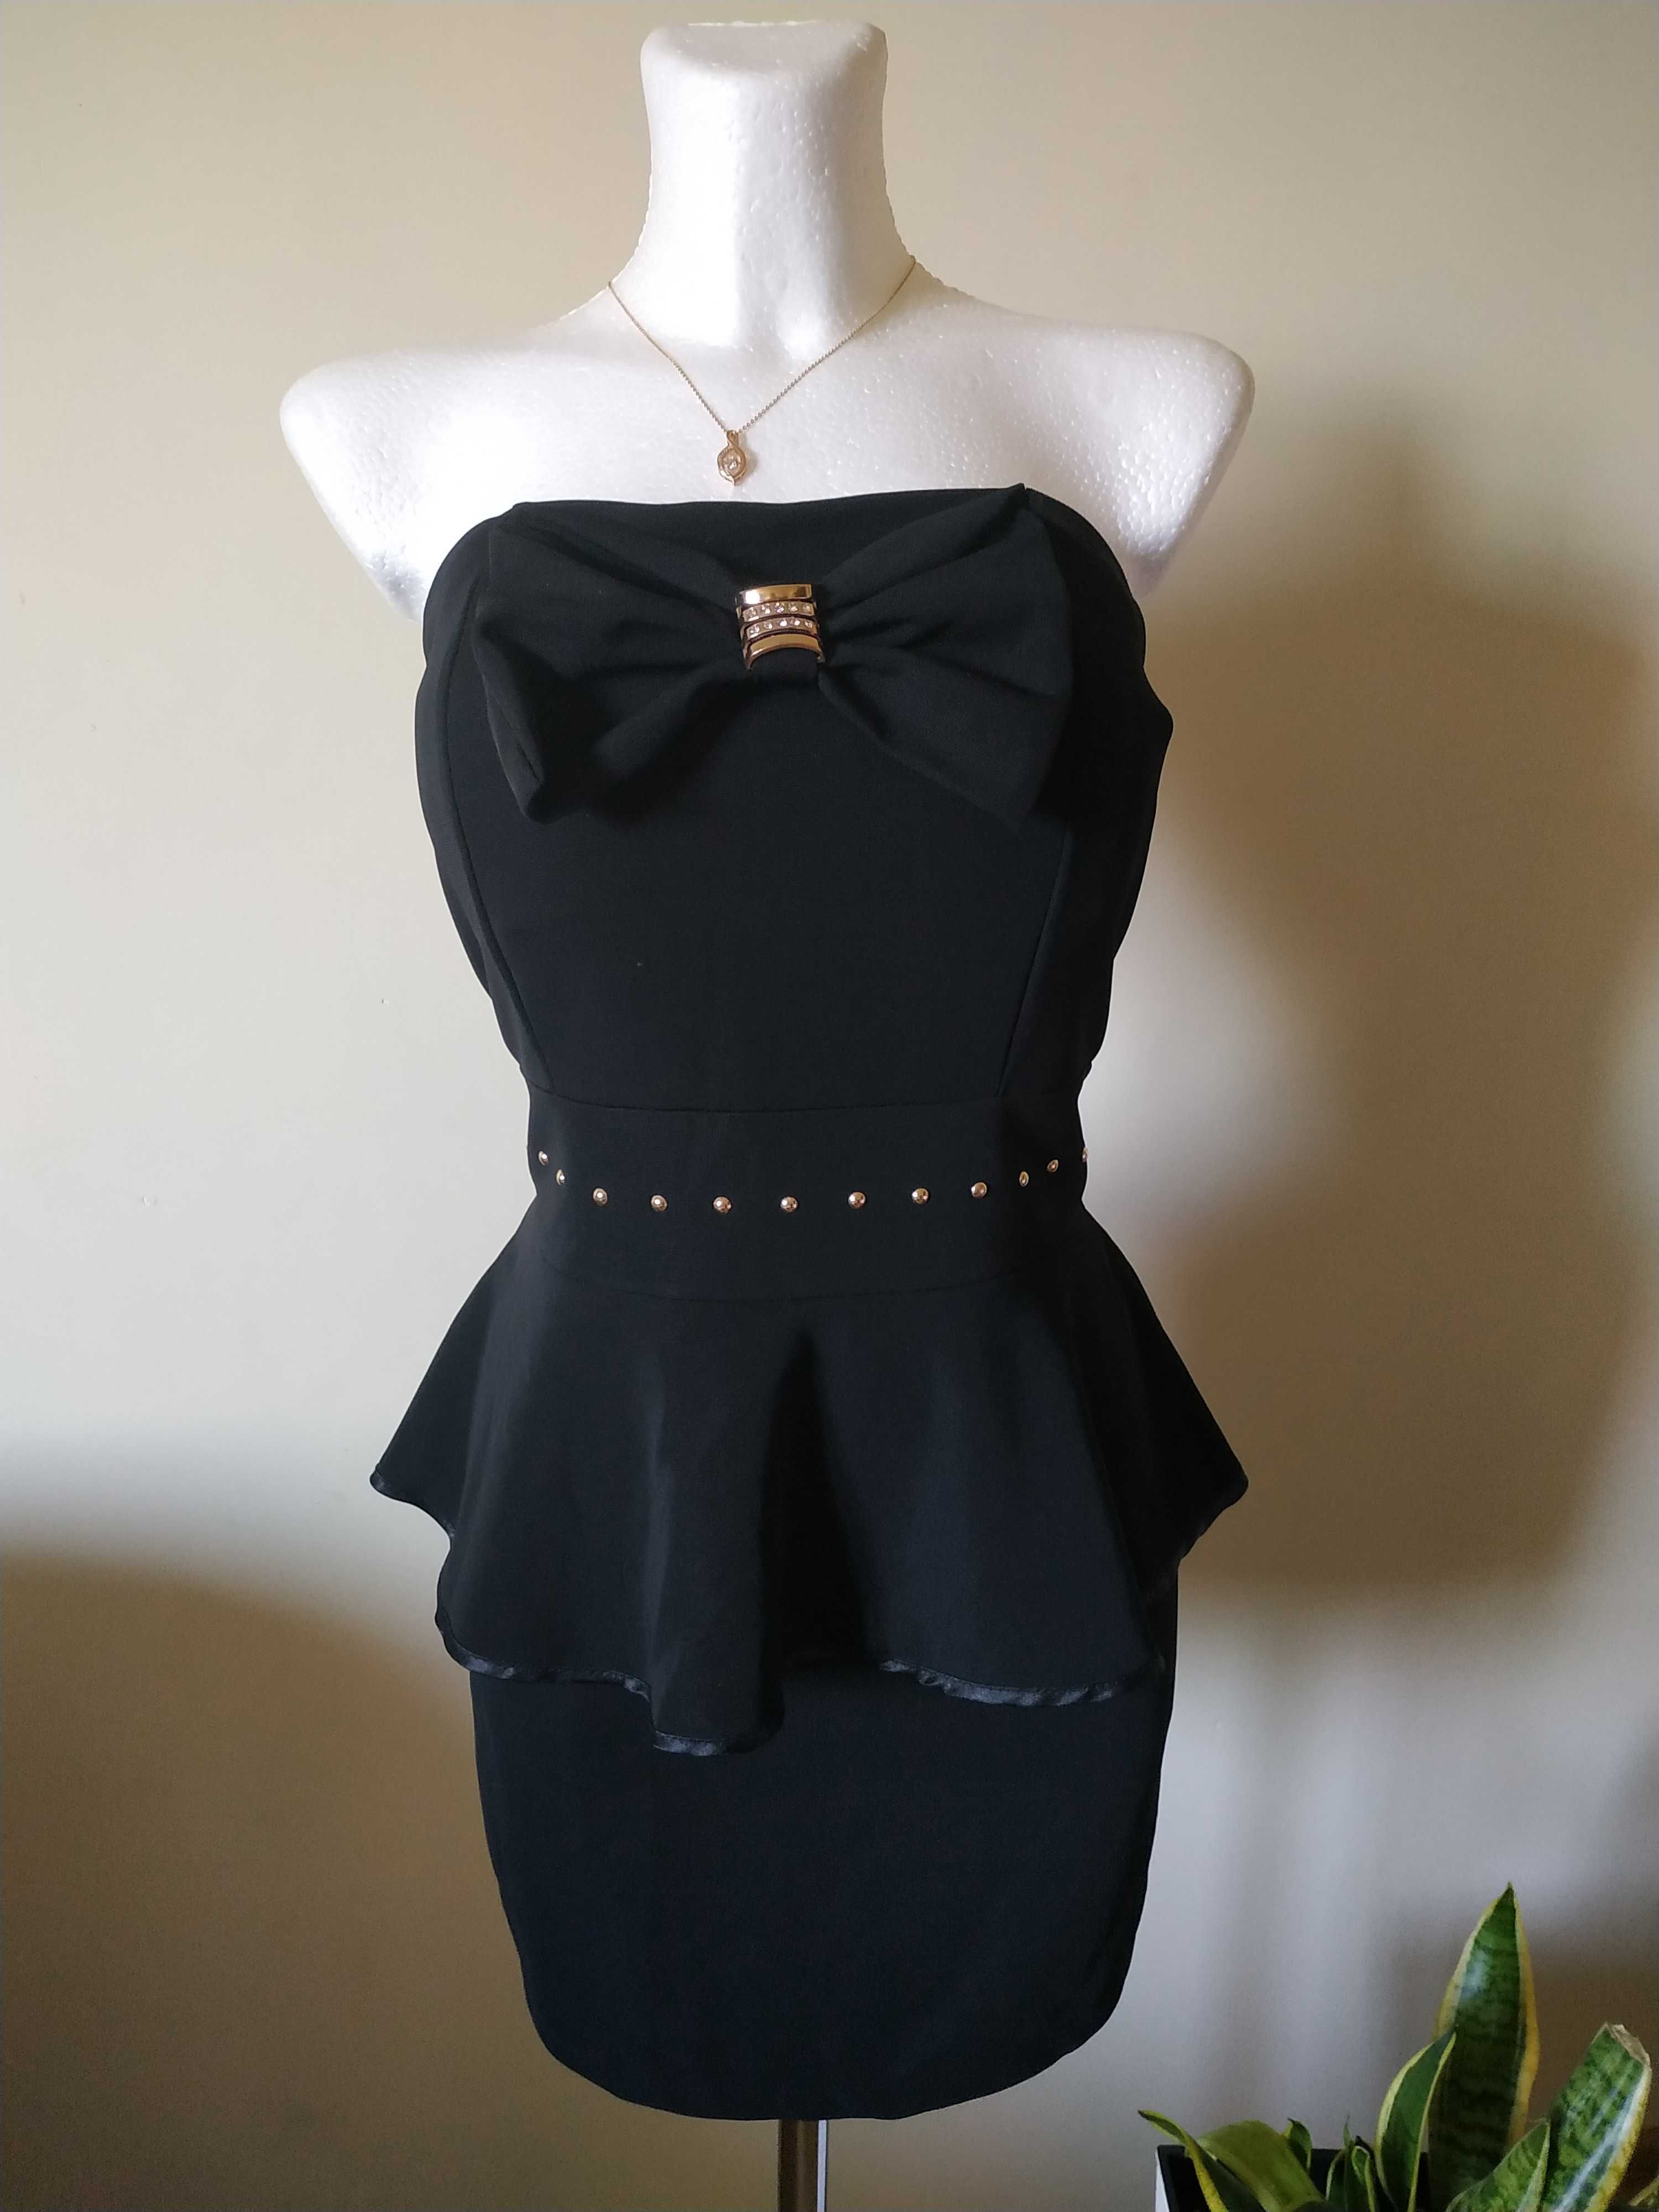 Mała czarna sukienka damska r. 40 L 12 Made in Italy nowa